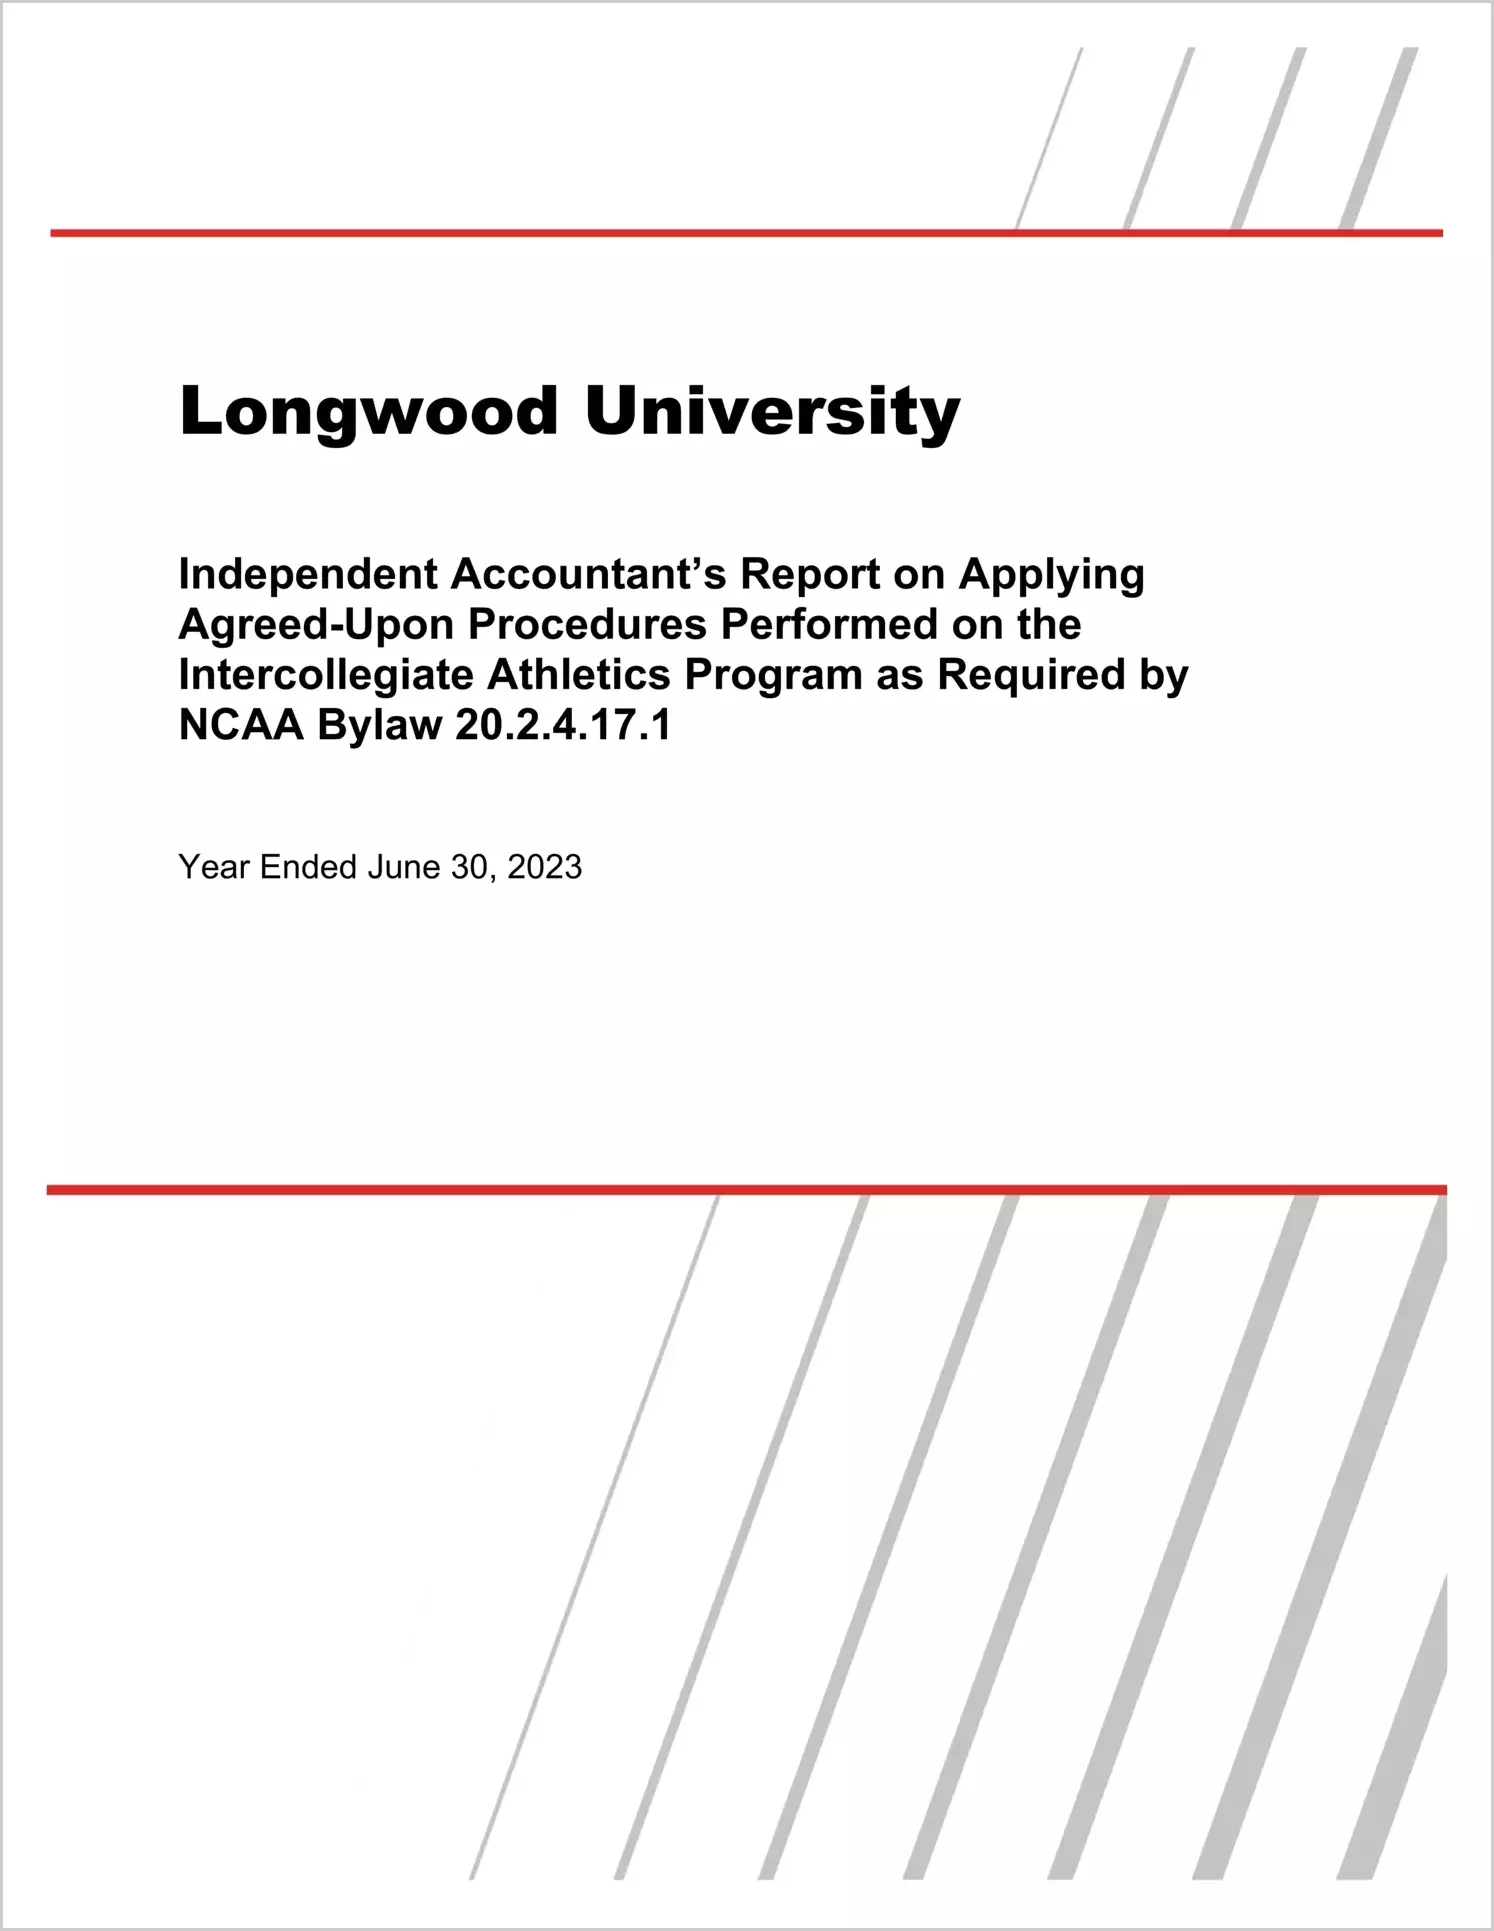 Longwood University Intercollegiate Athletics Programs for the year ended June 30, 2023